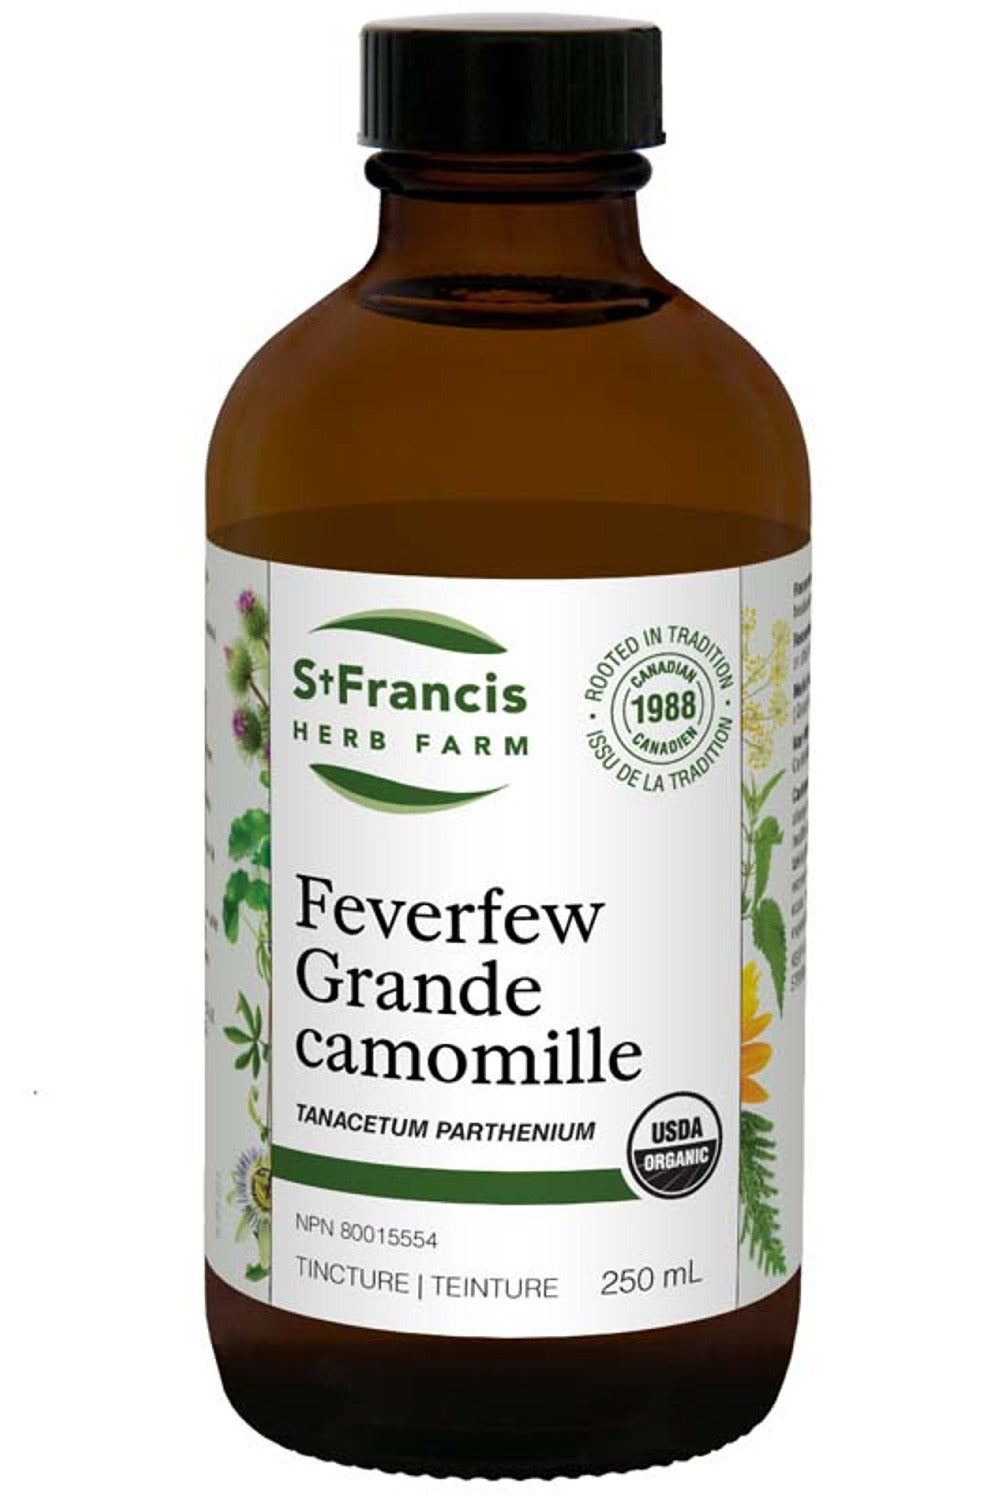 ST FRANCIS HERB FARM Feverfew (250 ml)